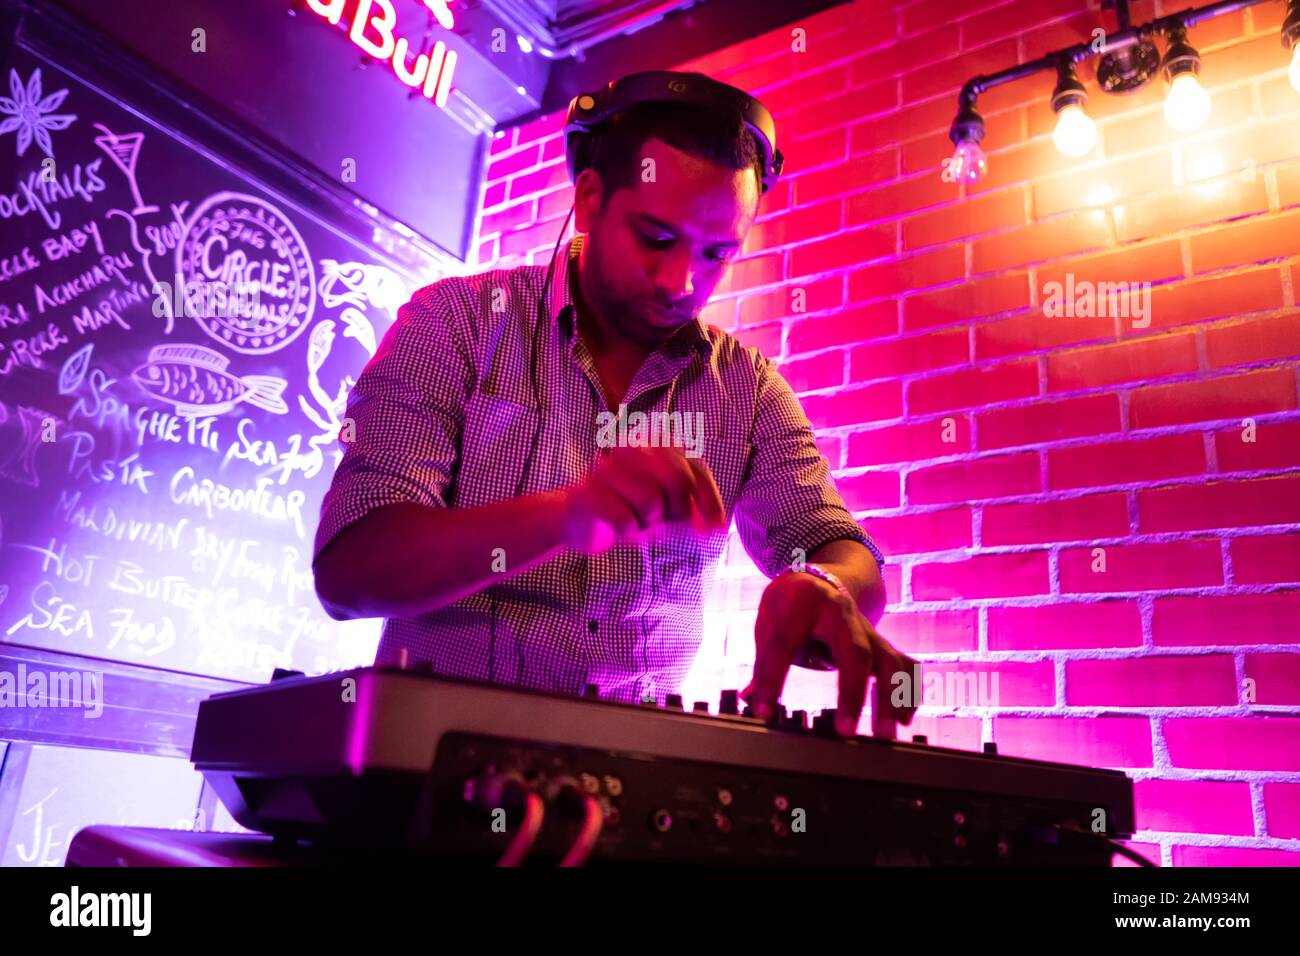 Male DJ playing music in club Stock Photo